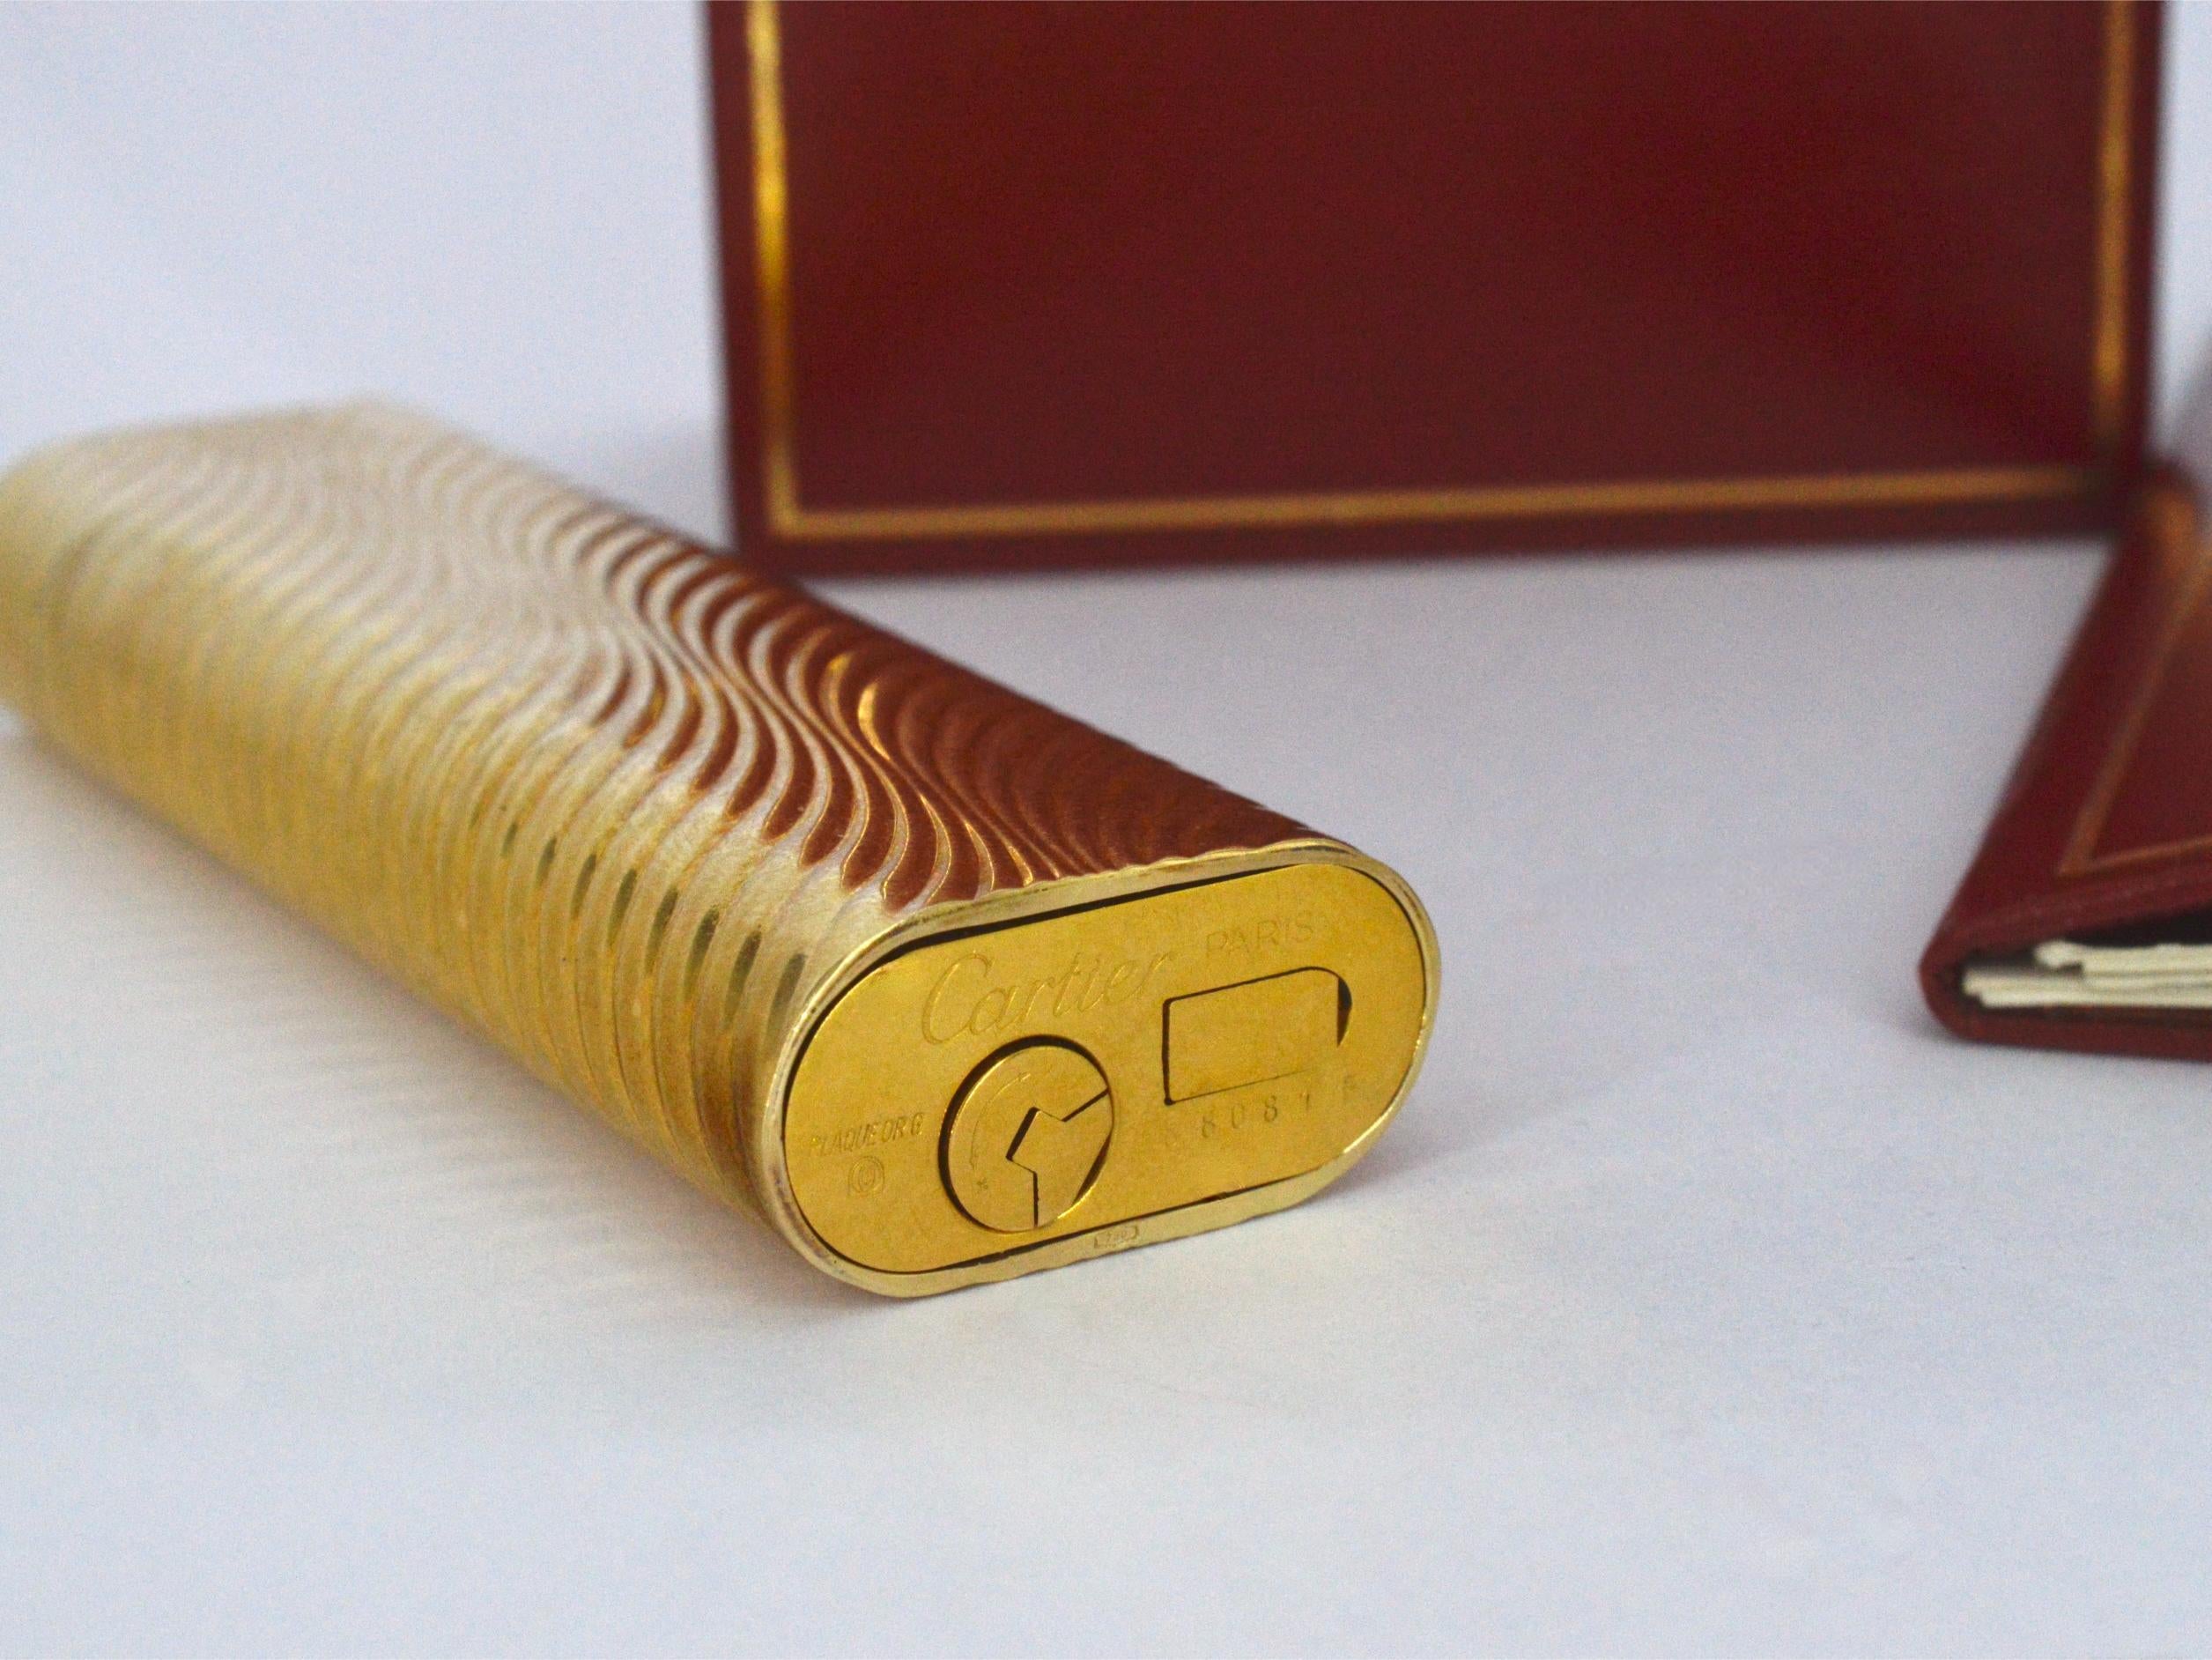 Cartier Paris lighter in original box 2